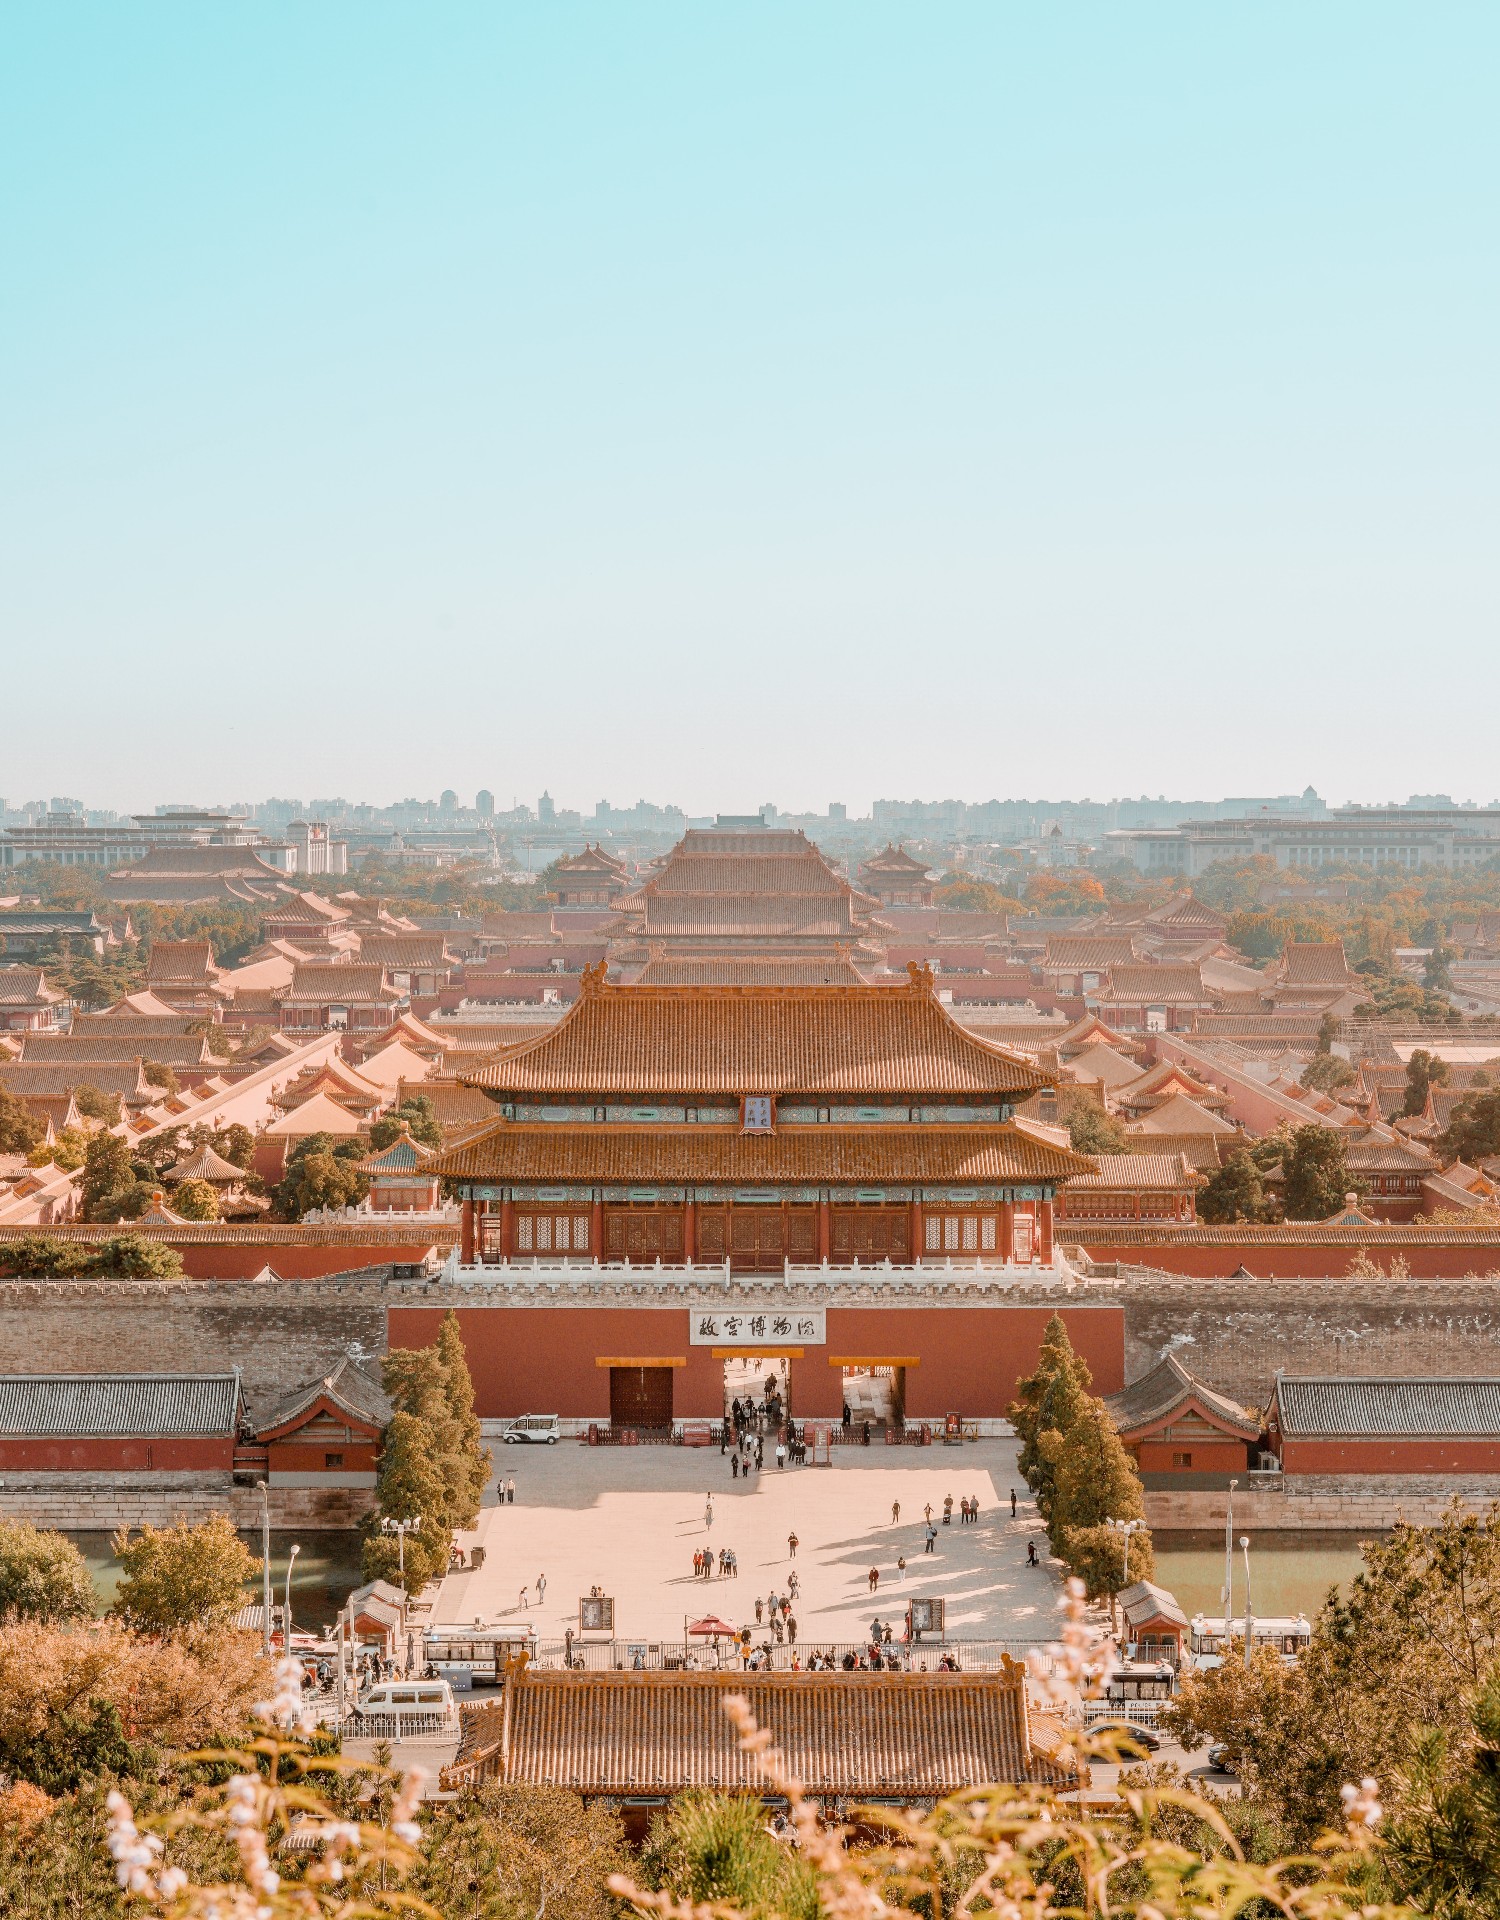 Forbidden City by Juniperhoton@unsplash